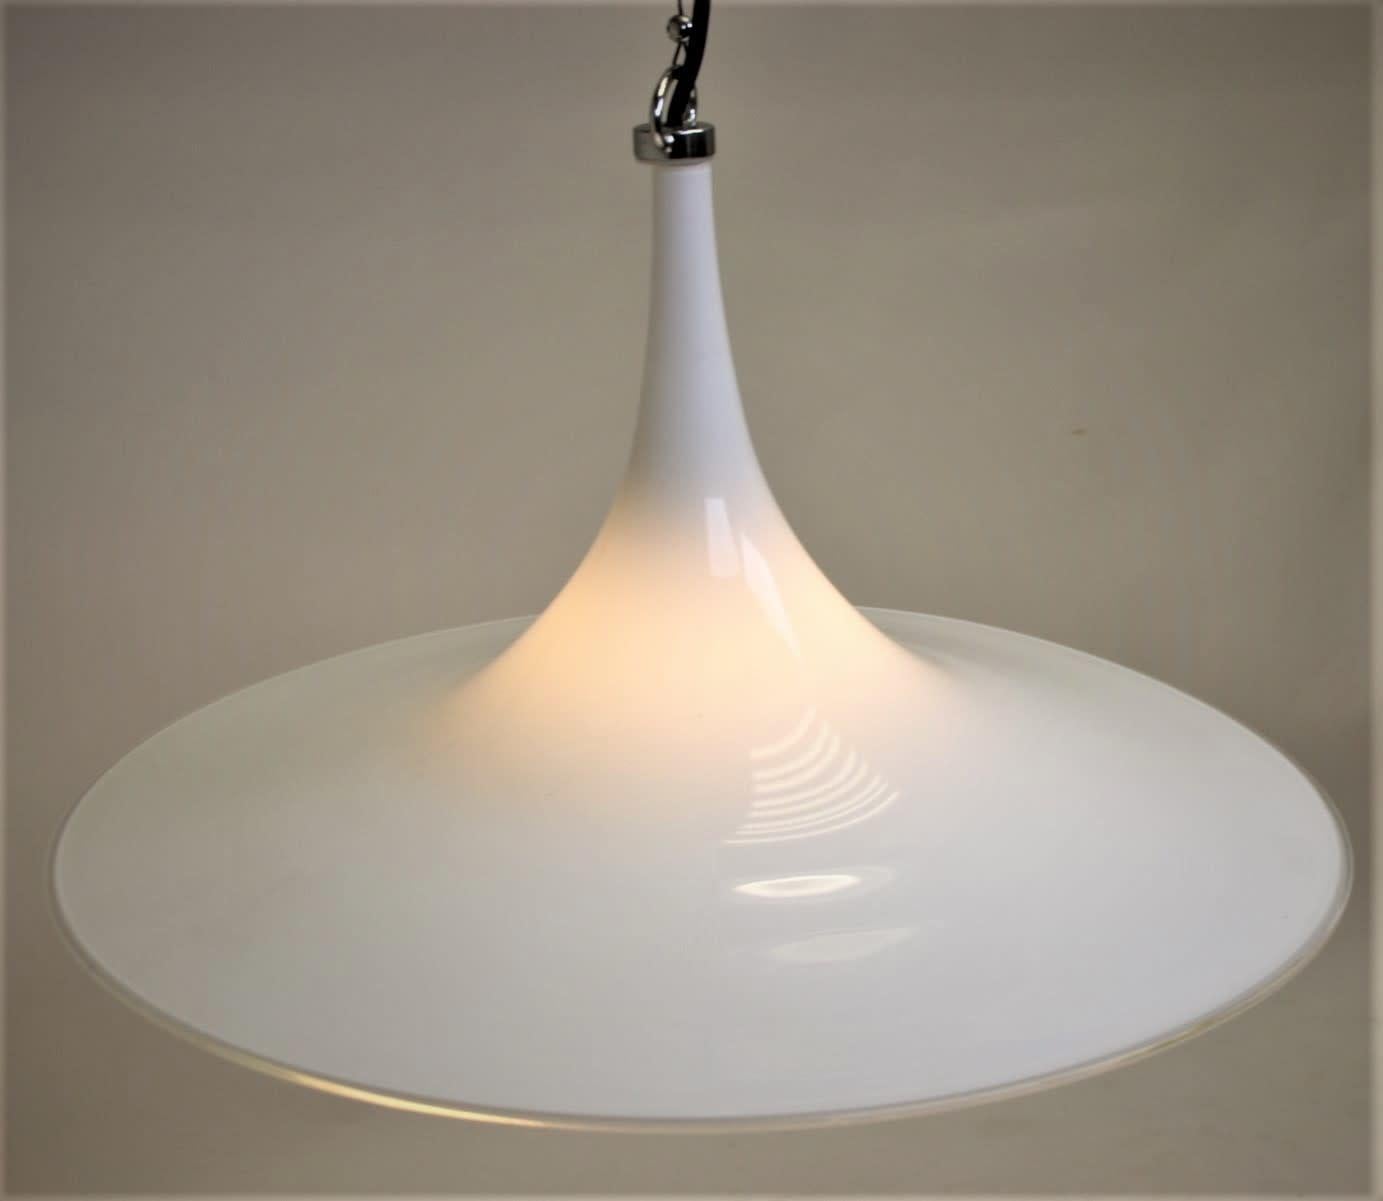 Lino Tagliapietra Pendant Lamp Made by Efferte Magia, 1980 Italy For Sale 2